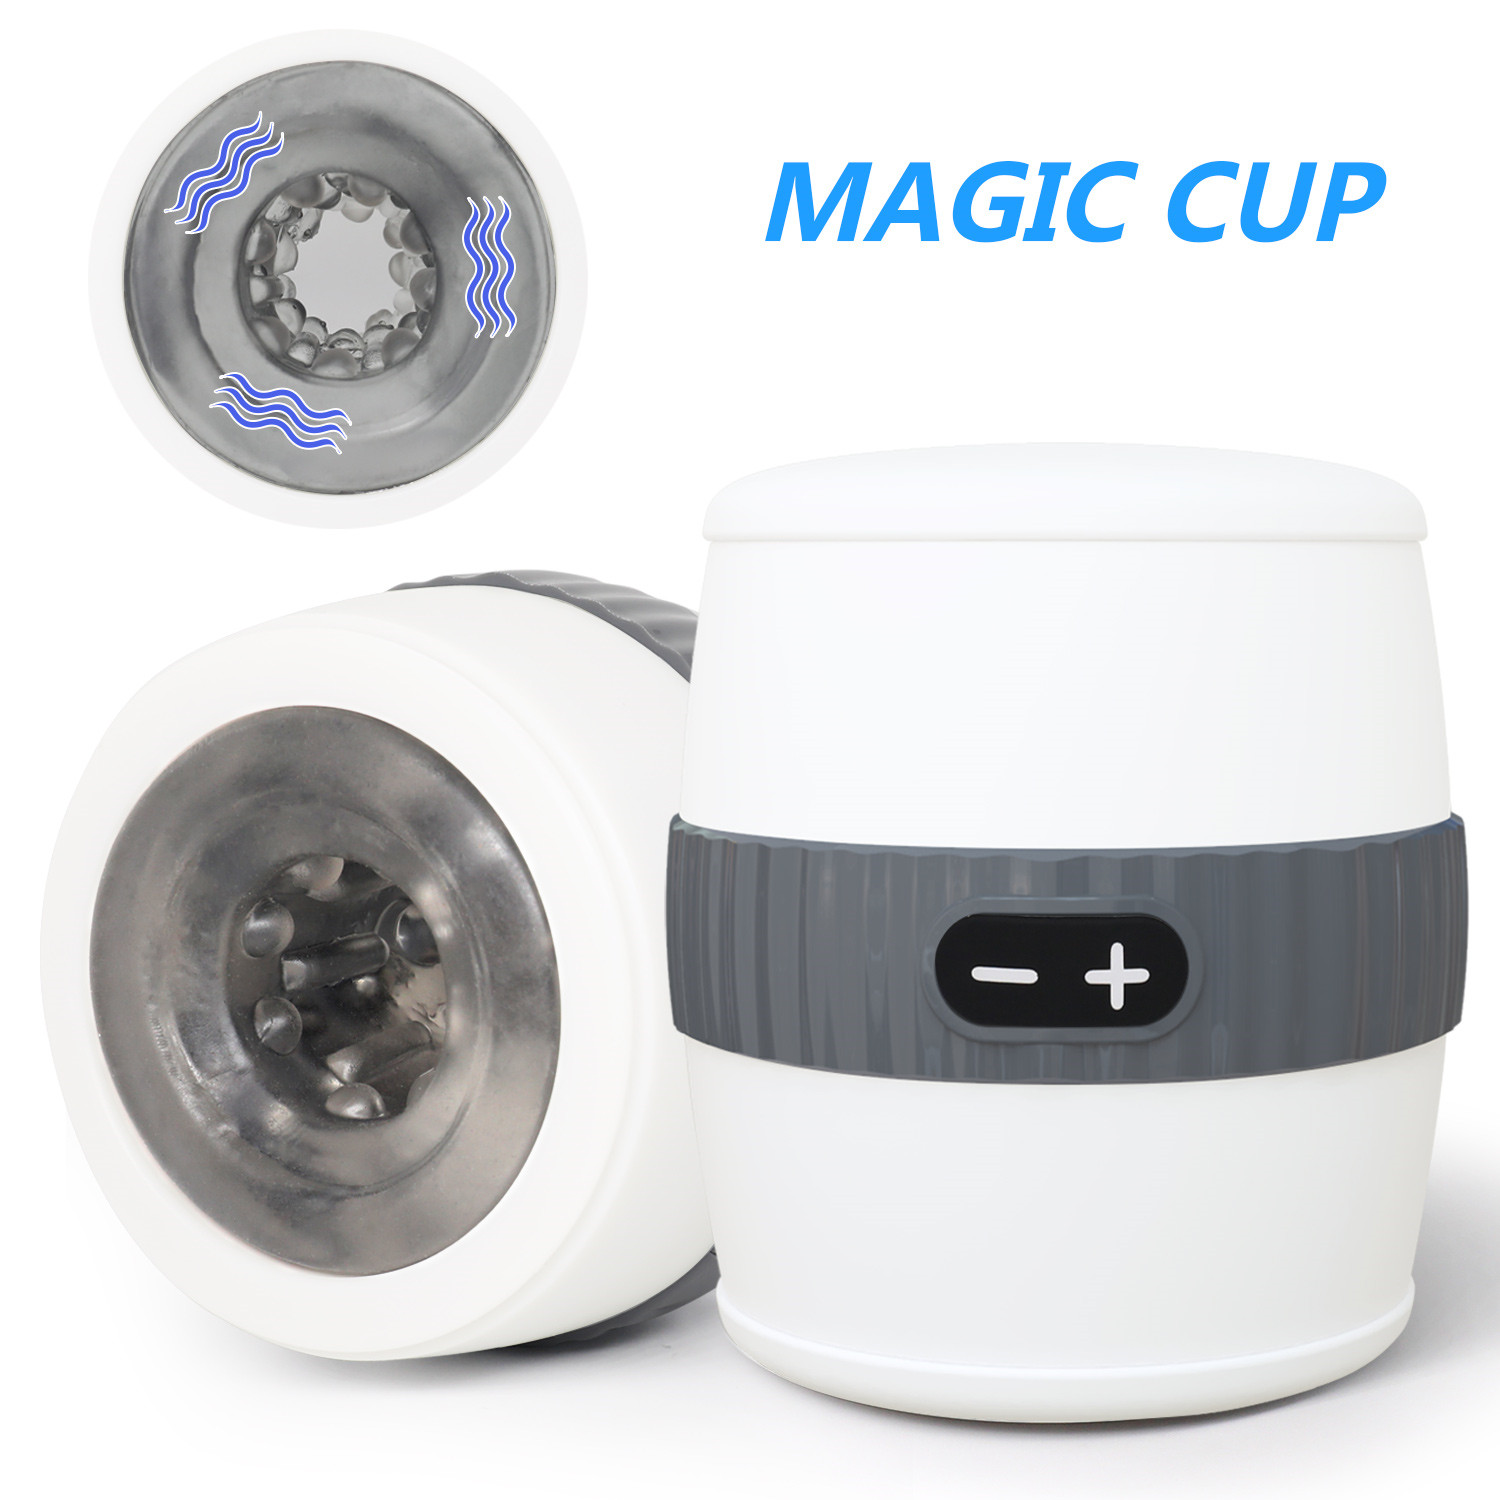 Magic cup